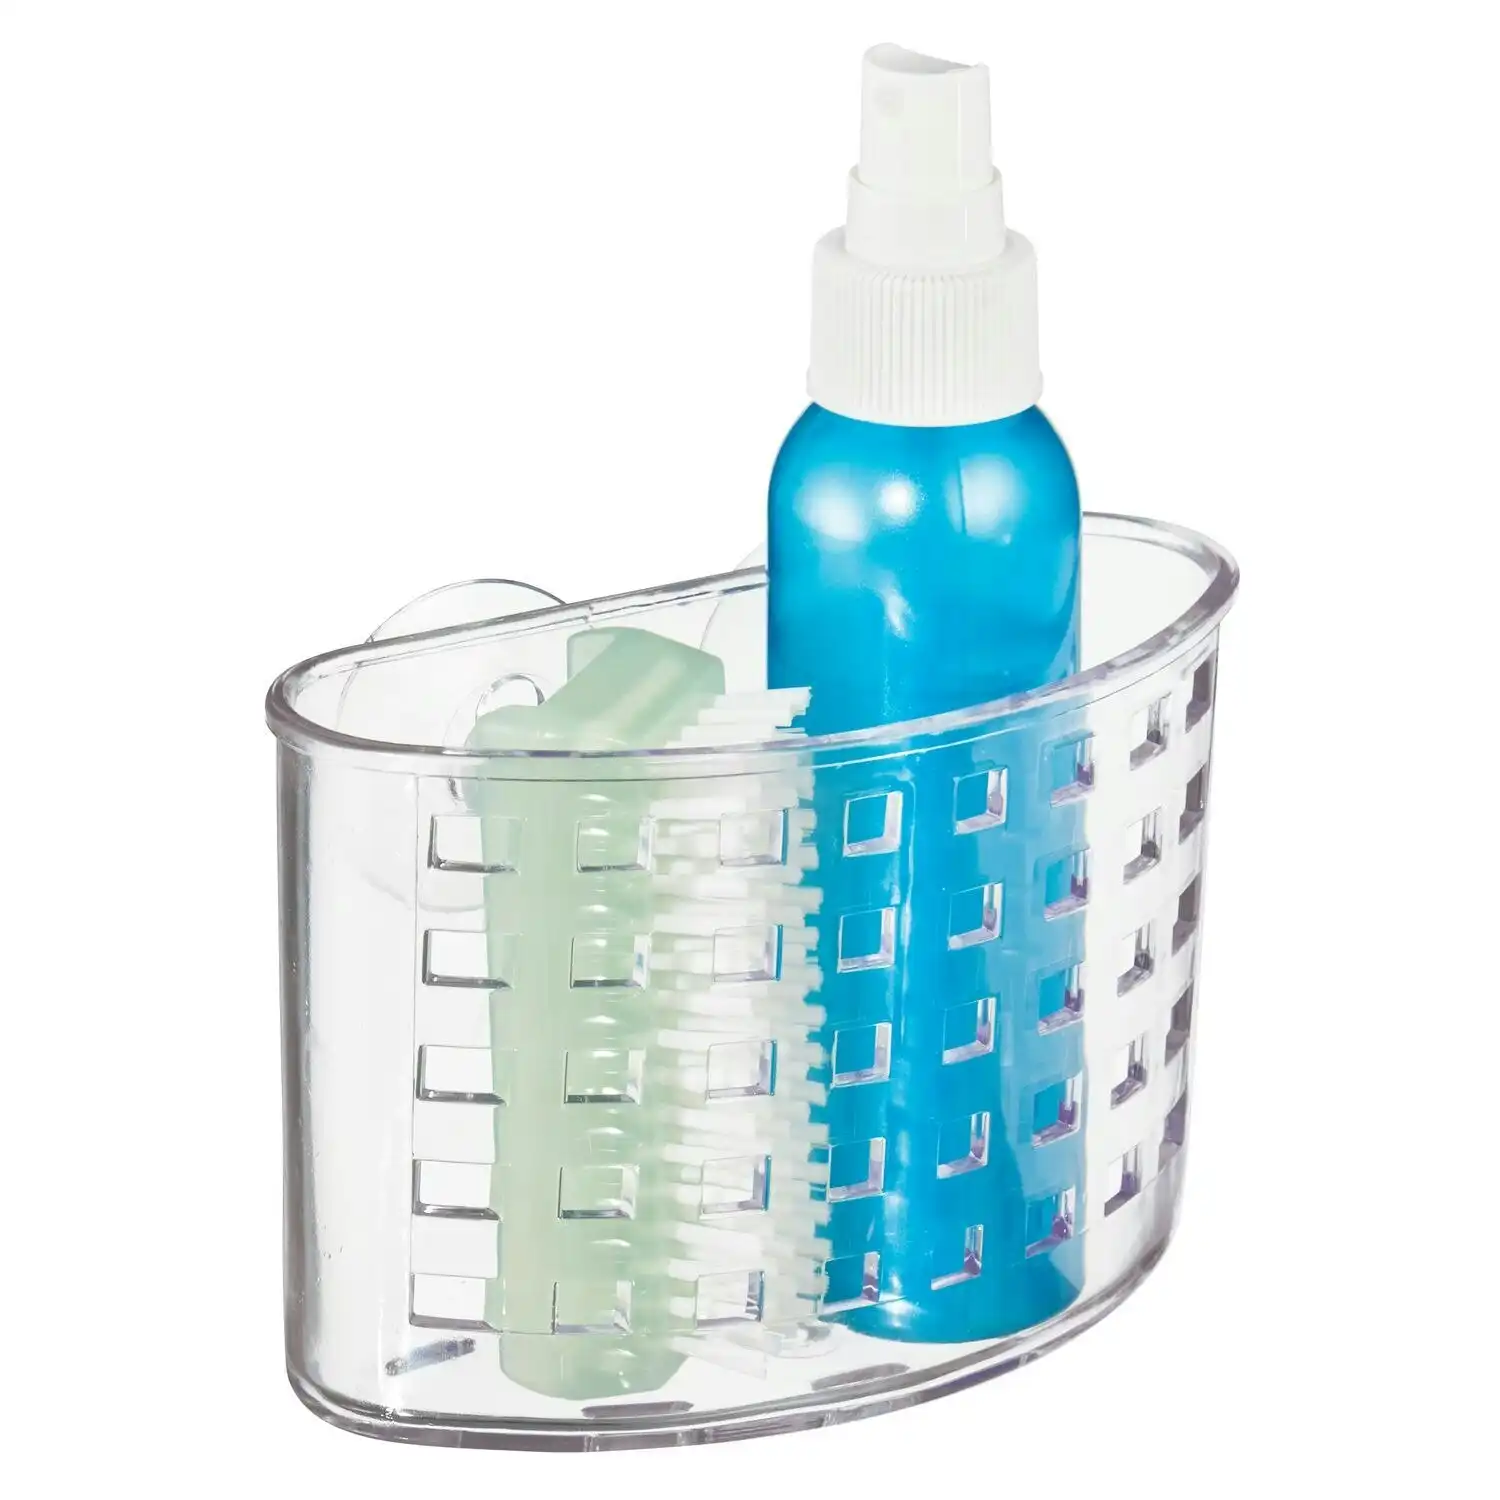 2x Idesign 13.5cm Suction Hanging Bath Organiser Toothbrush Storage Basket Clear